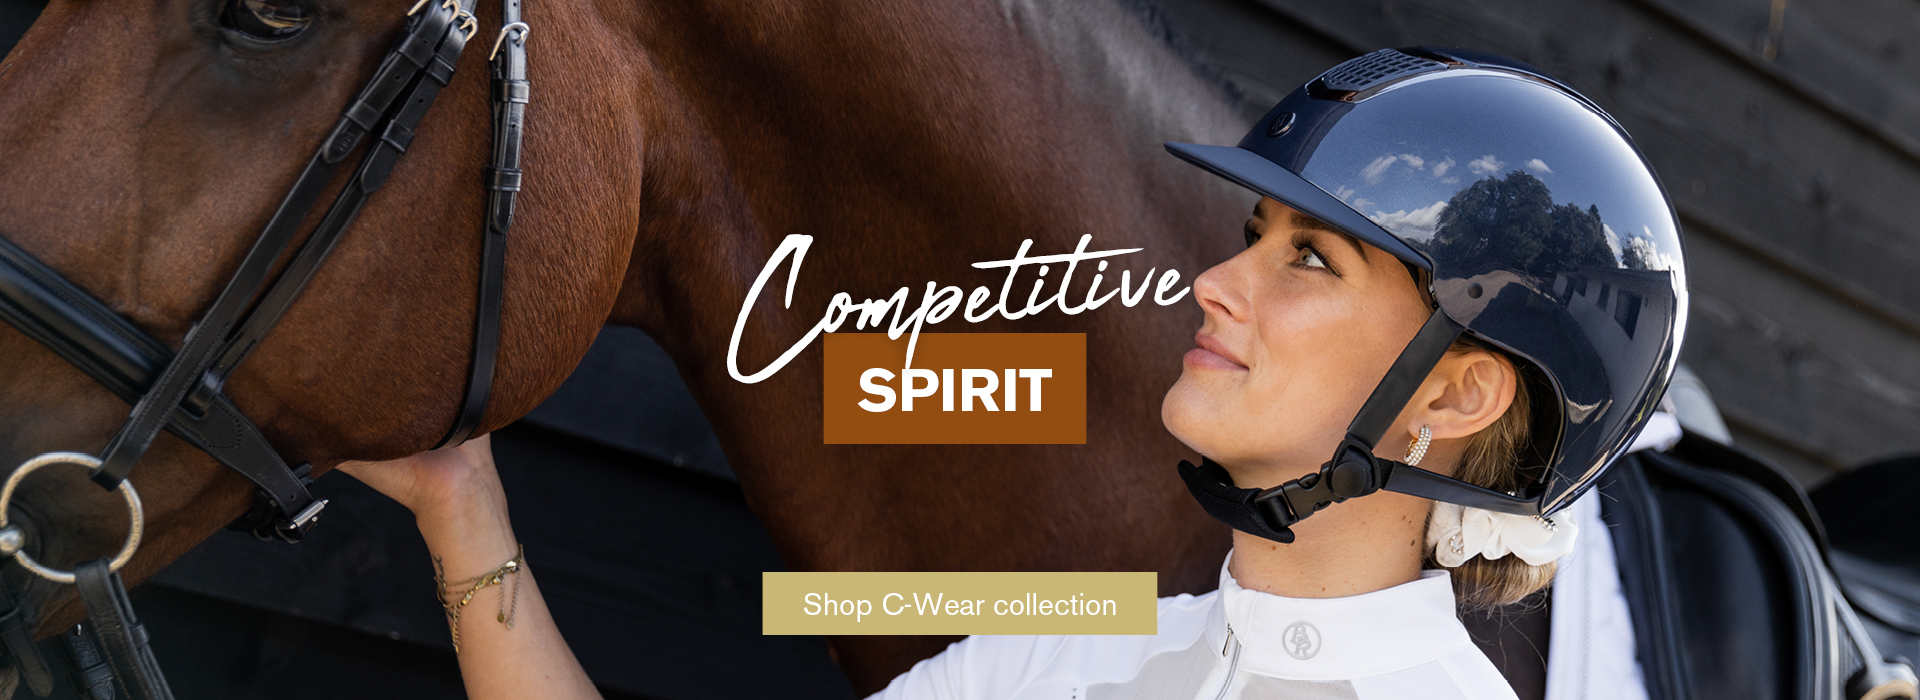 Competitive Spirit